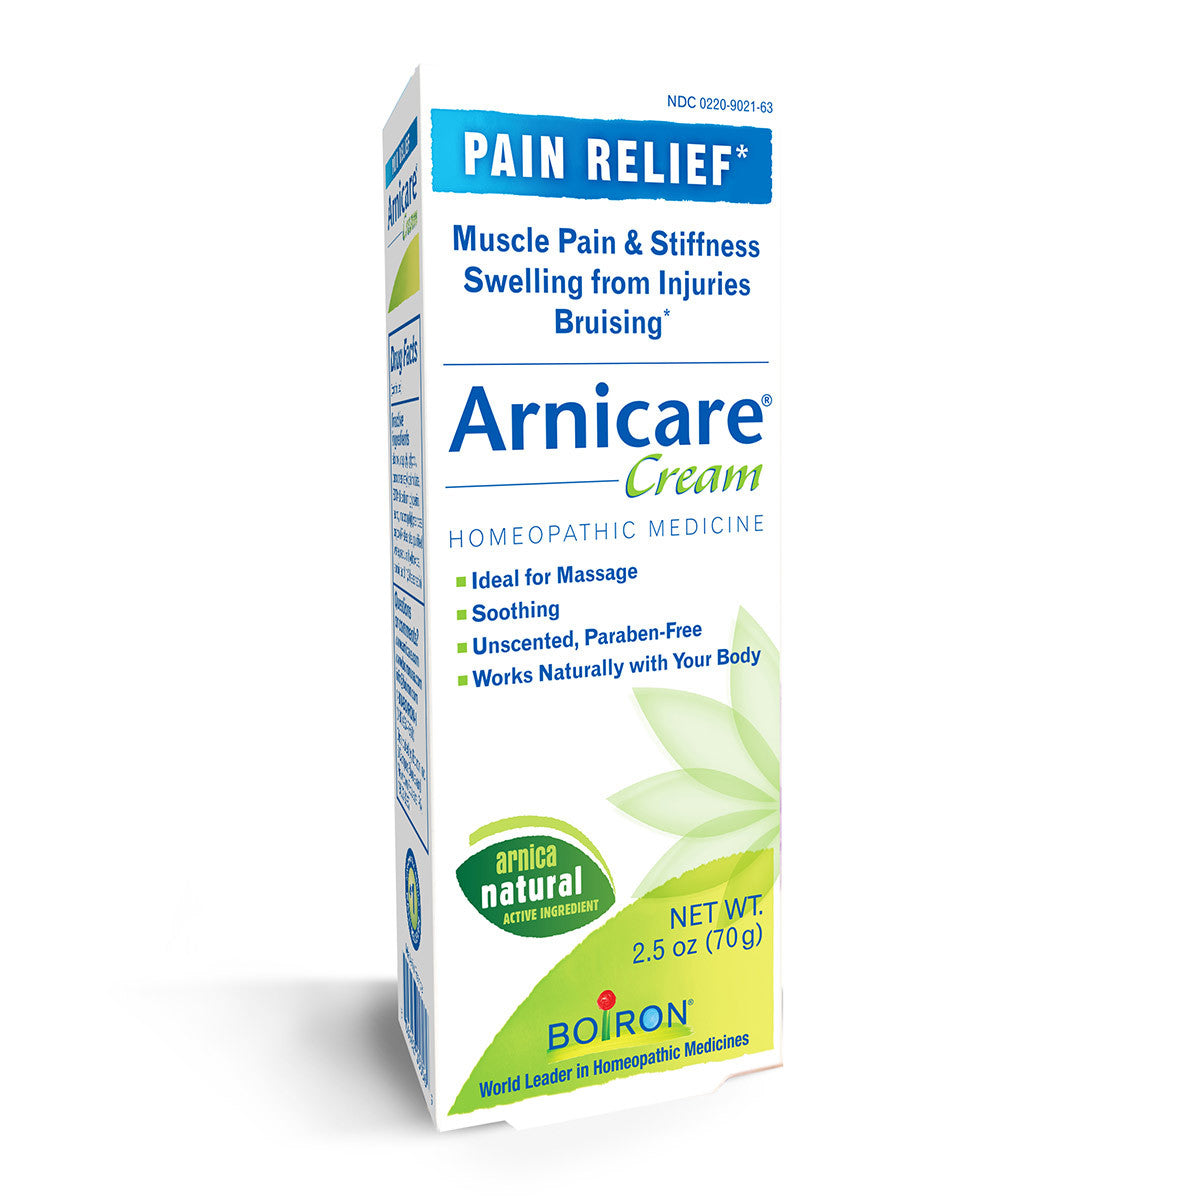 Primary image of Arnicare Cream